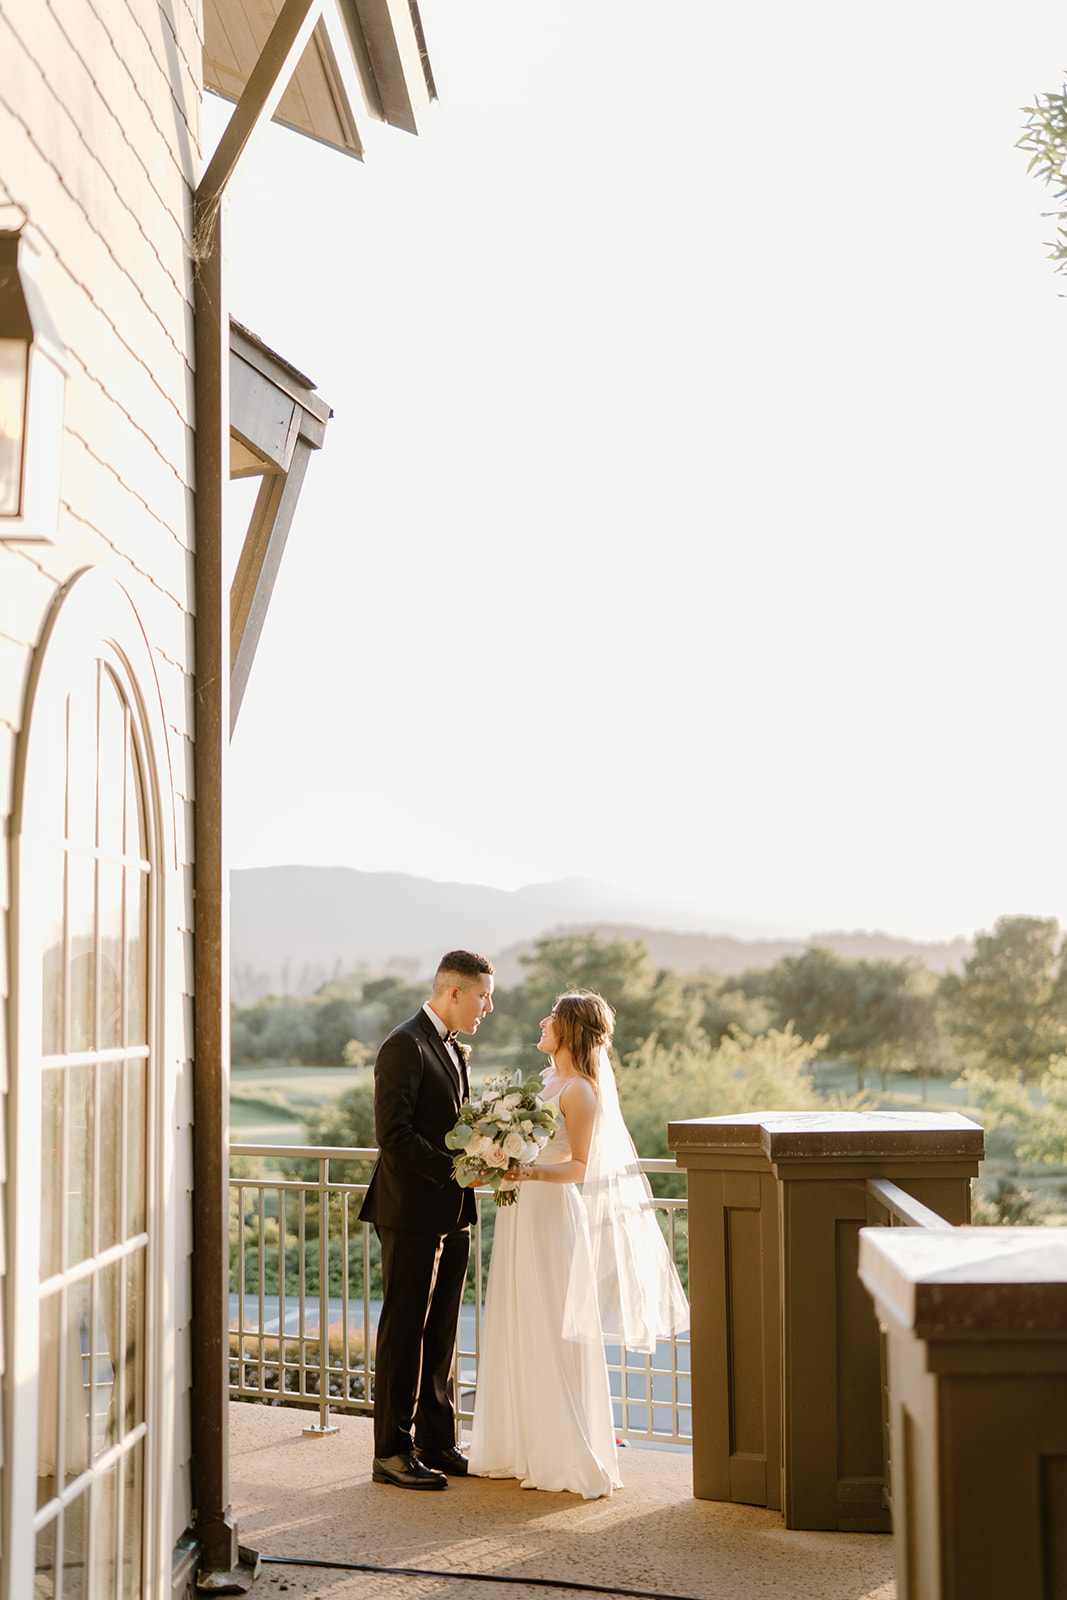 Sydney Jai Photography - Northern California wedding photographer, bride and groom photos, golden hour wedding photos